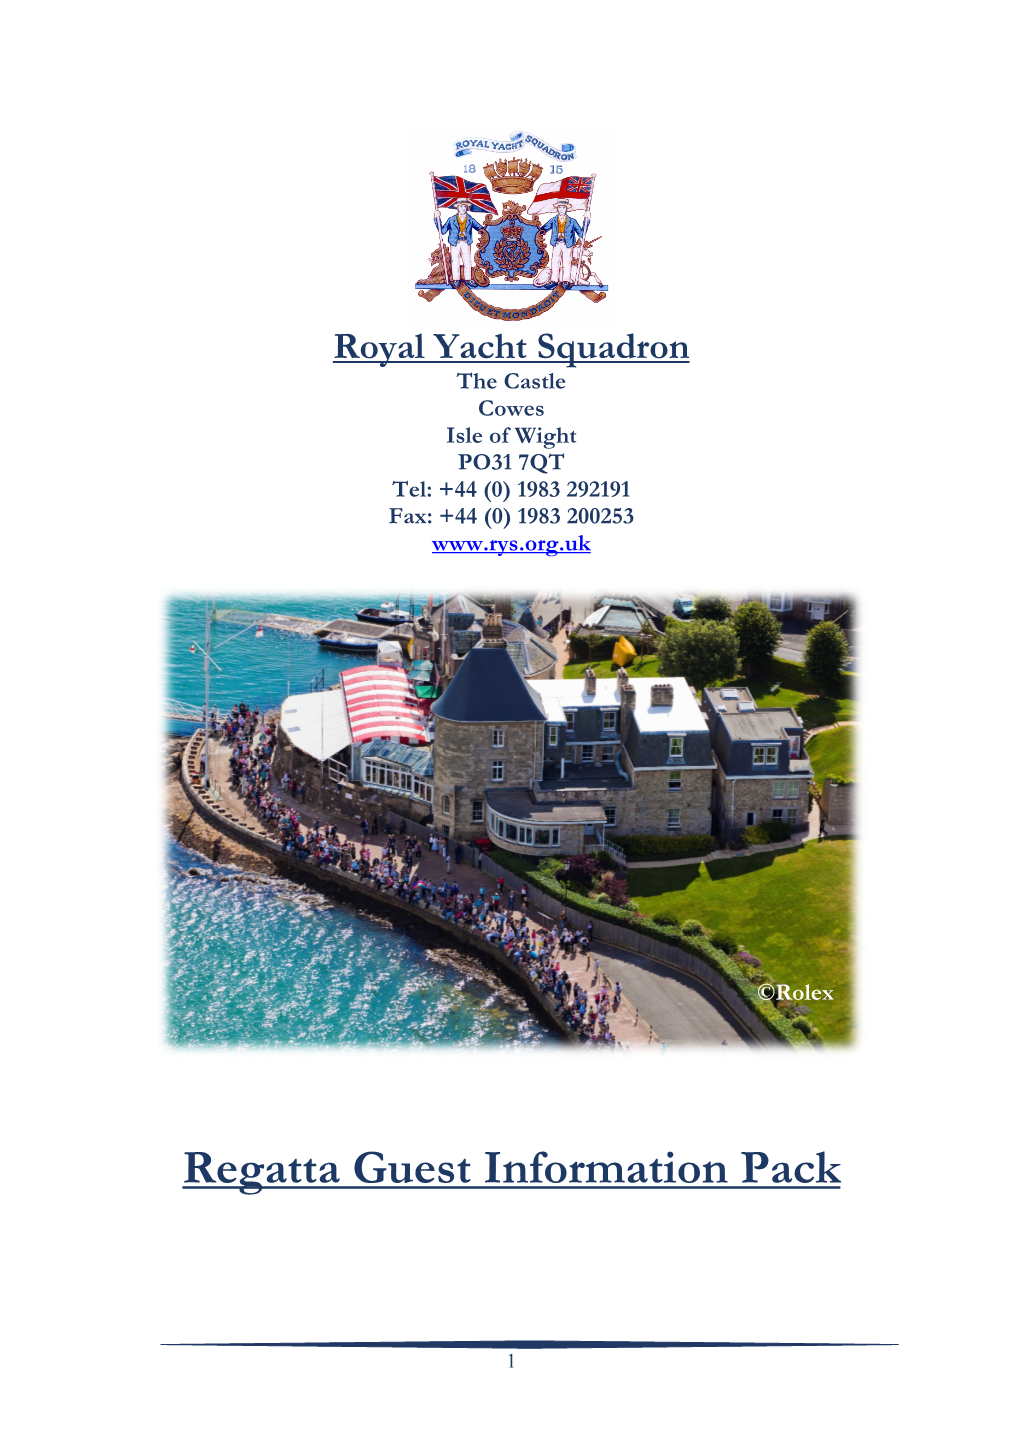 Cowes Regatta Guest Information Pack 2018